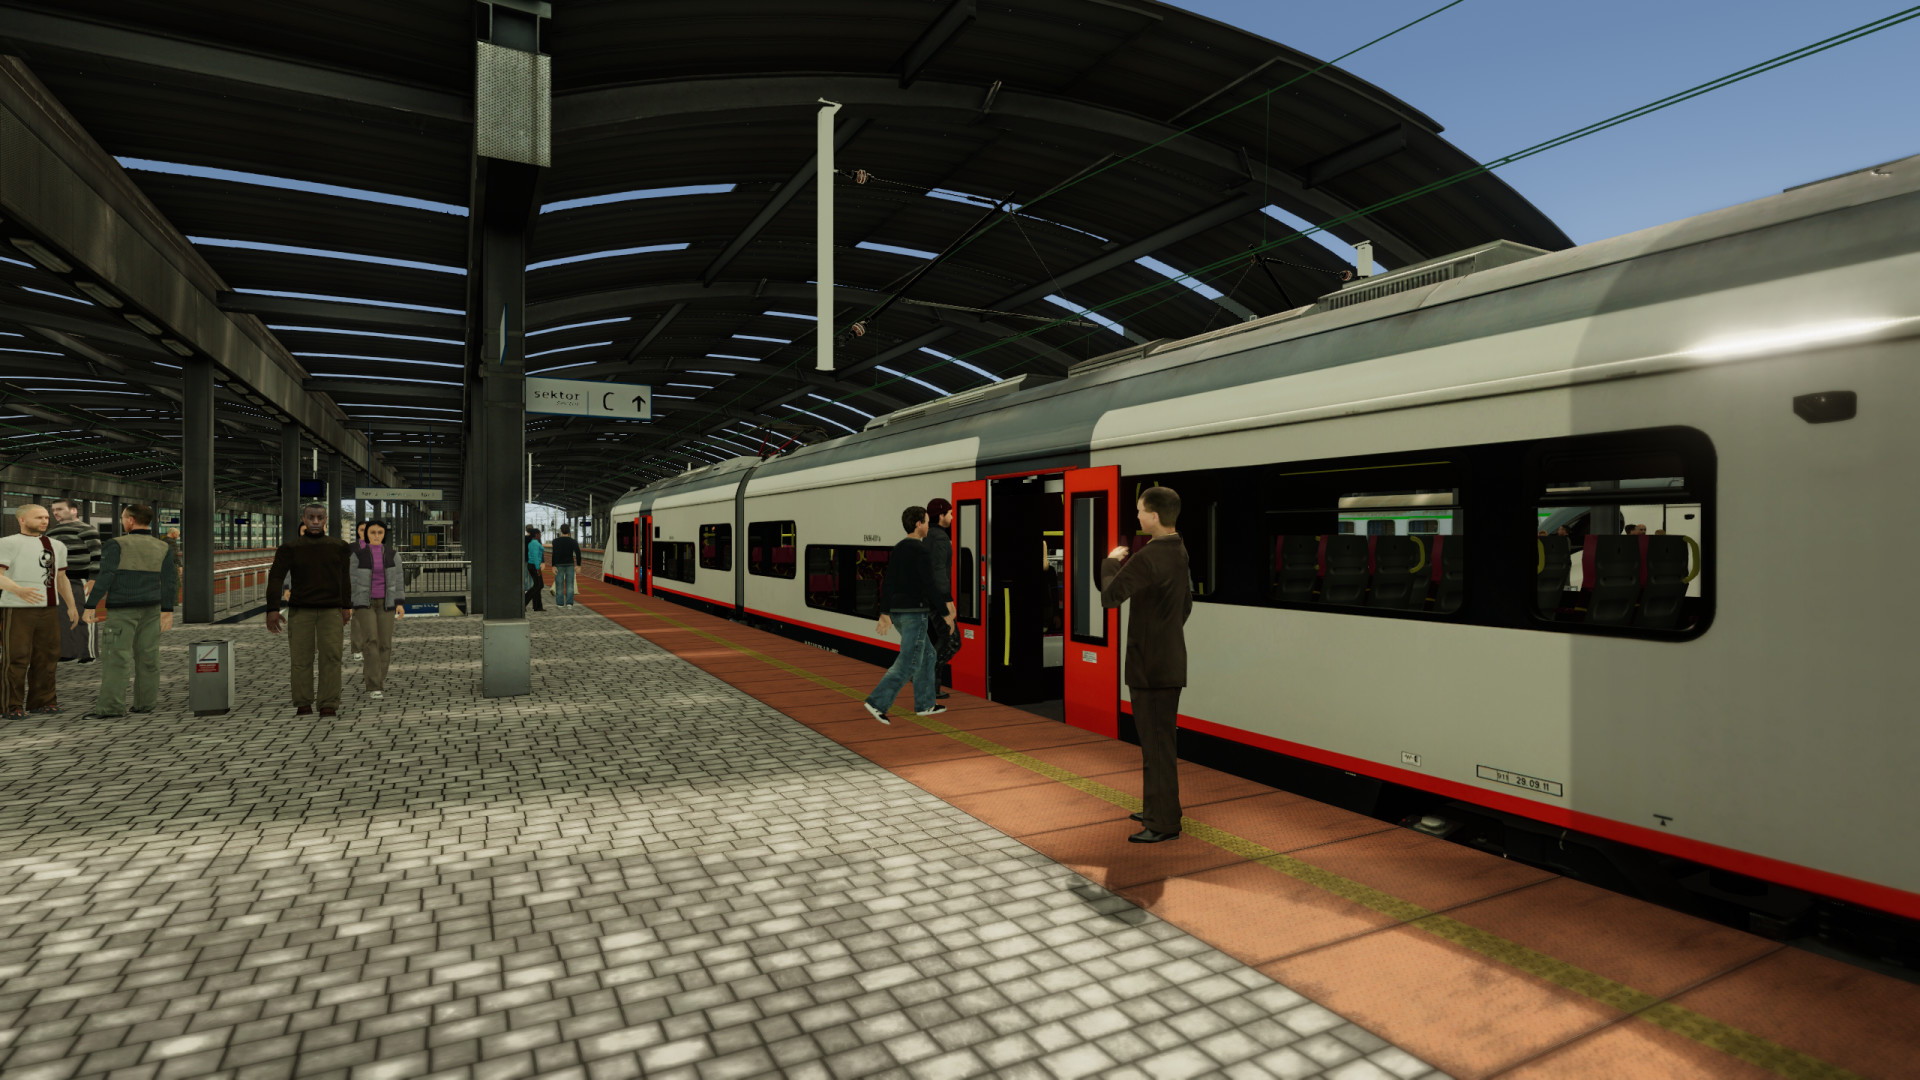 SimRail - The Railway Simulator - screenshot 2